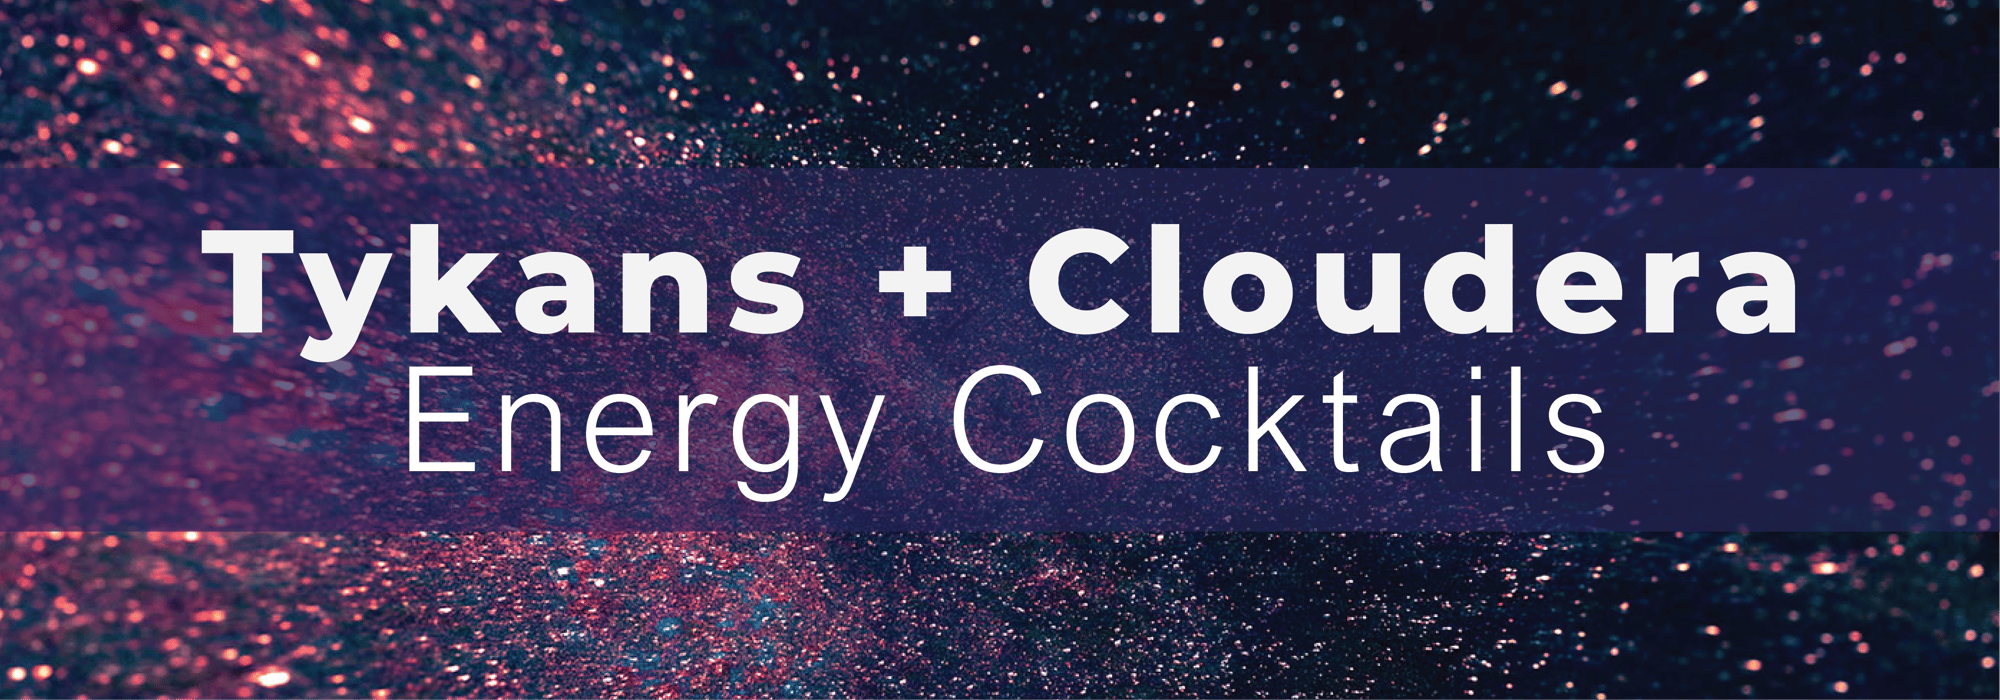 Tykans + Cloudera - Energy Cocktails